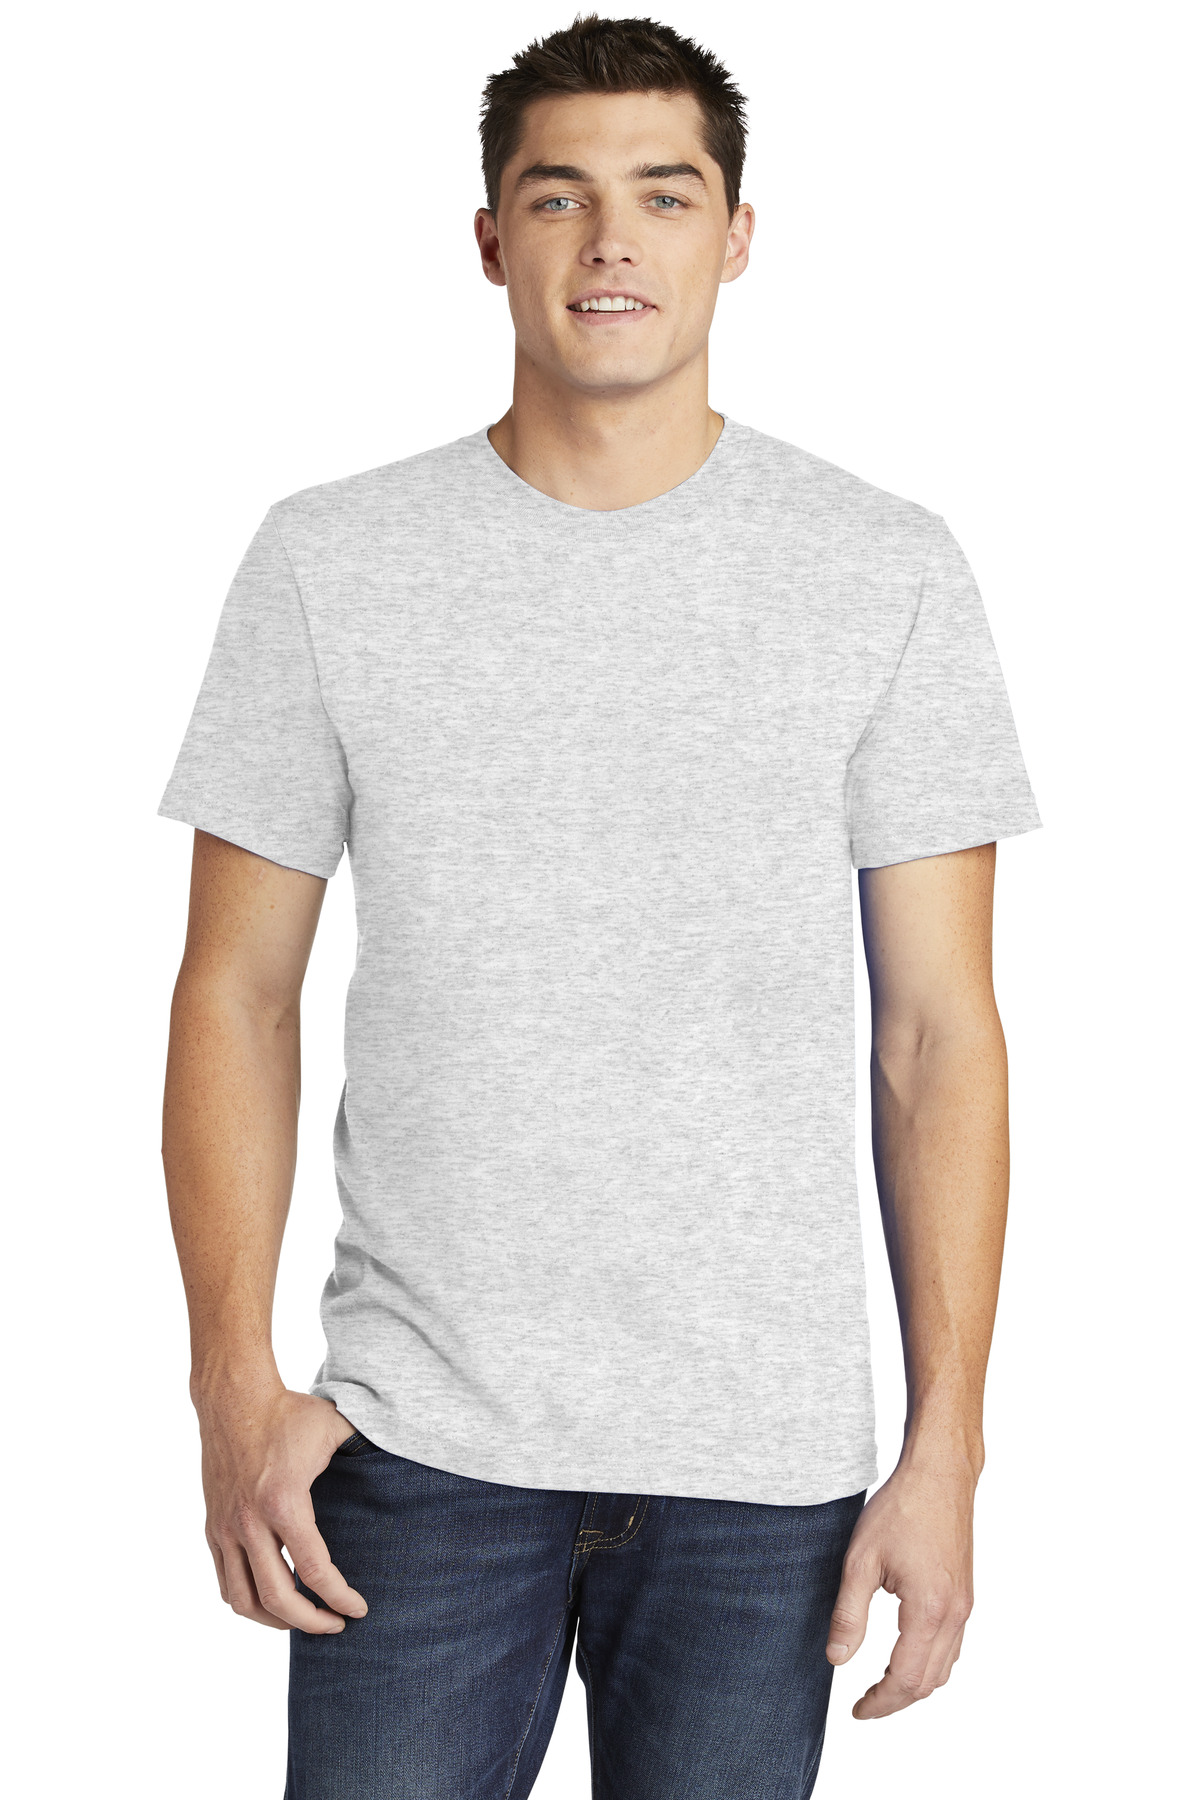 American Apparel Fine Jersey Unisex T-Shirt-